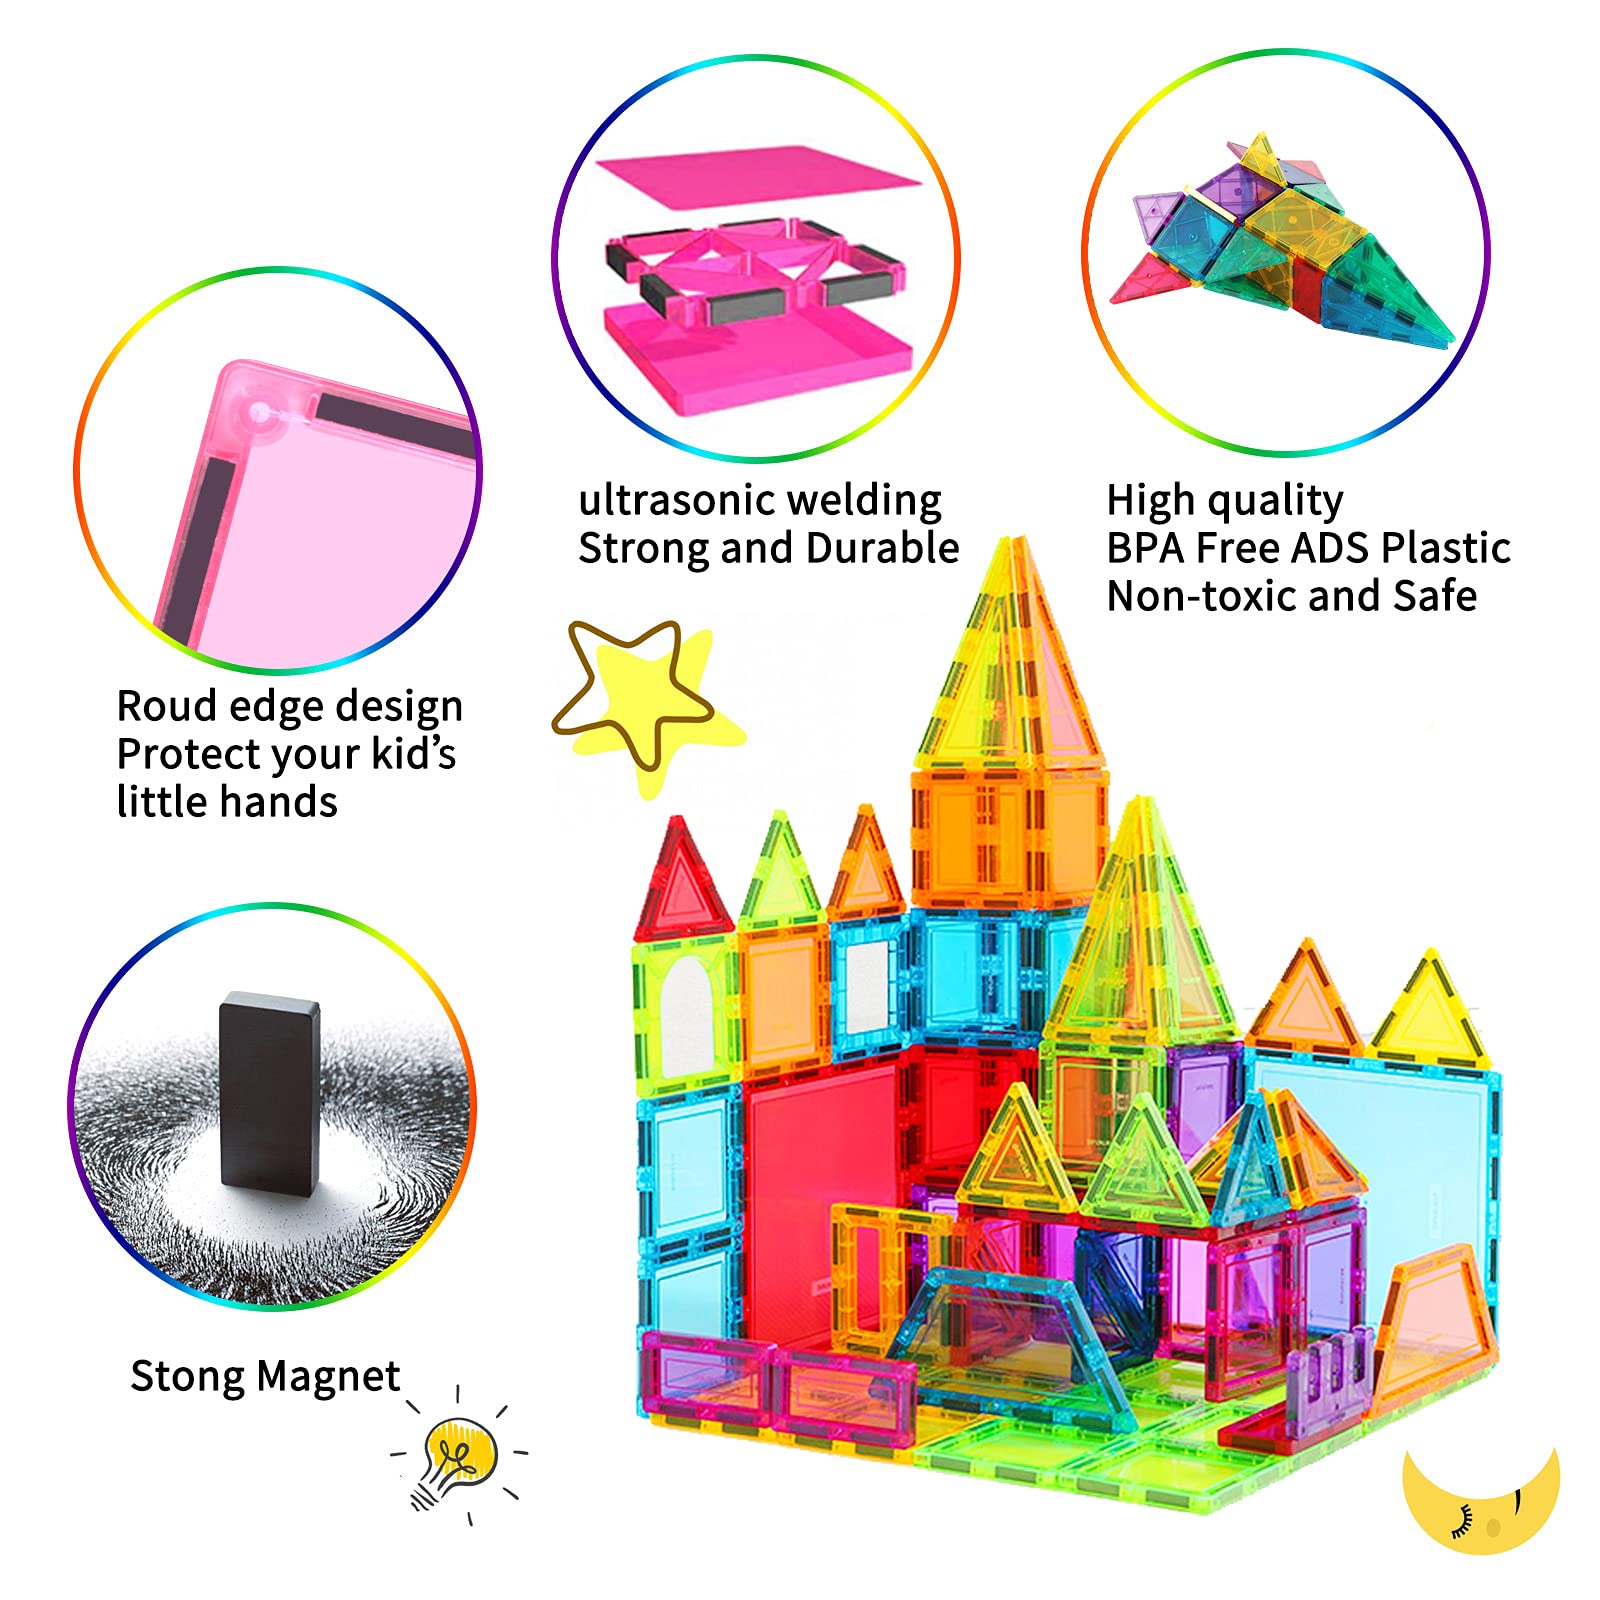 SUNHE YHK Kids Magnetic Tiles Toys, 100Pcs 3D Magnetic Building Blocks Tiles Set, Building Construction Educational STEM Toys for 3+ Year Old Boys and Girls